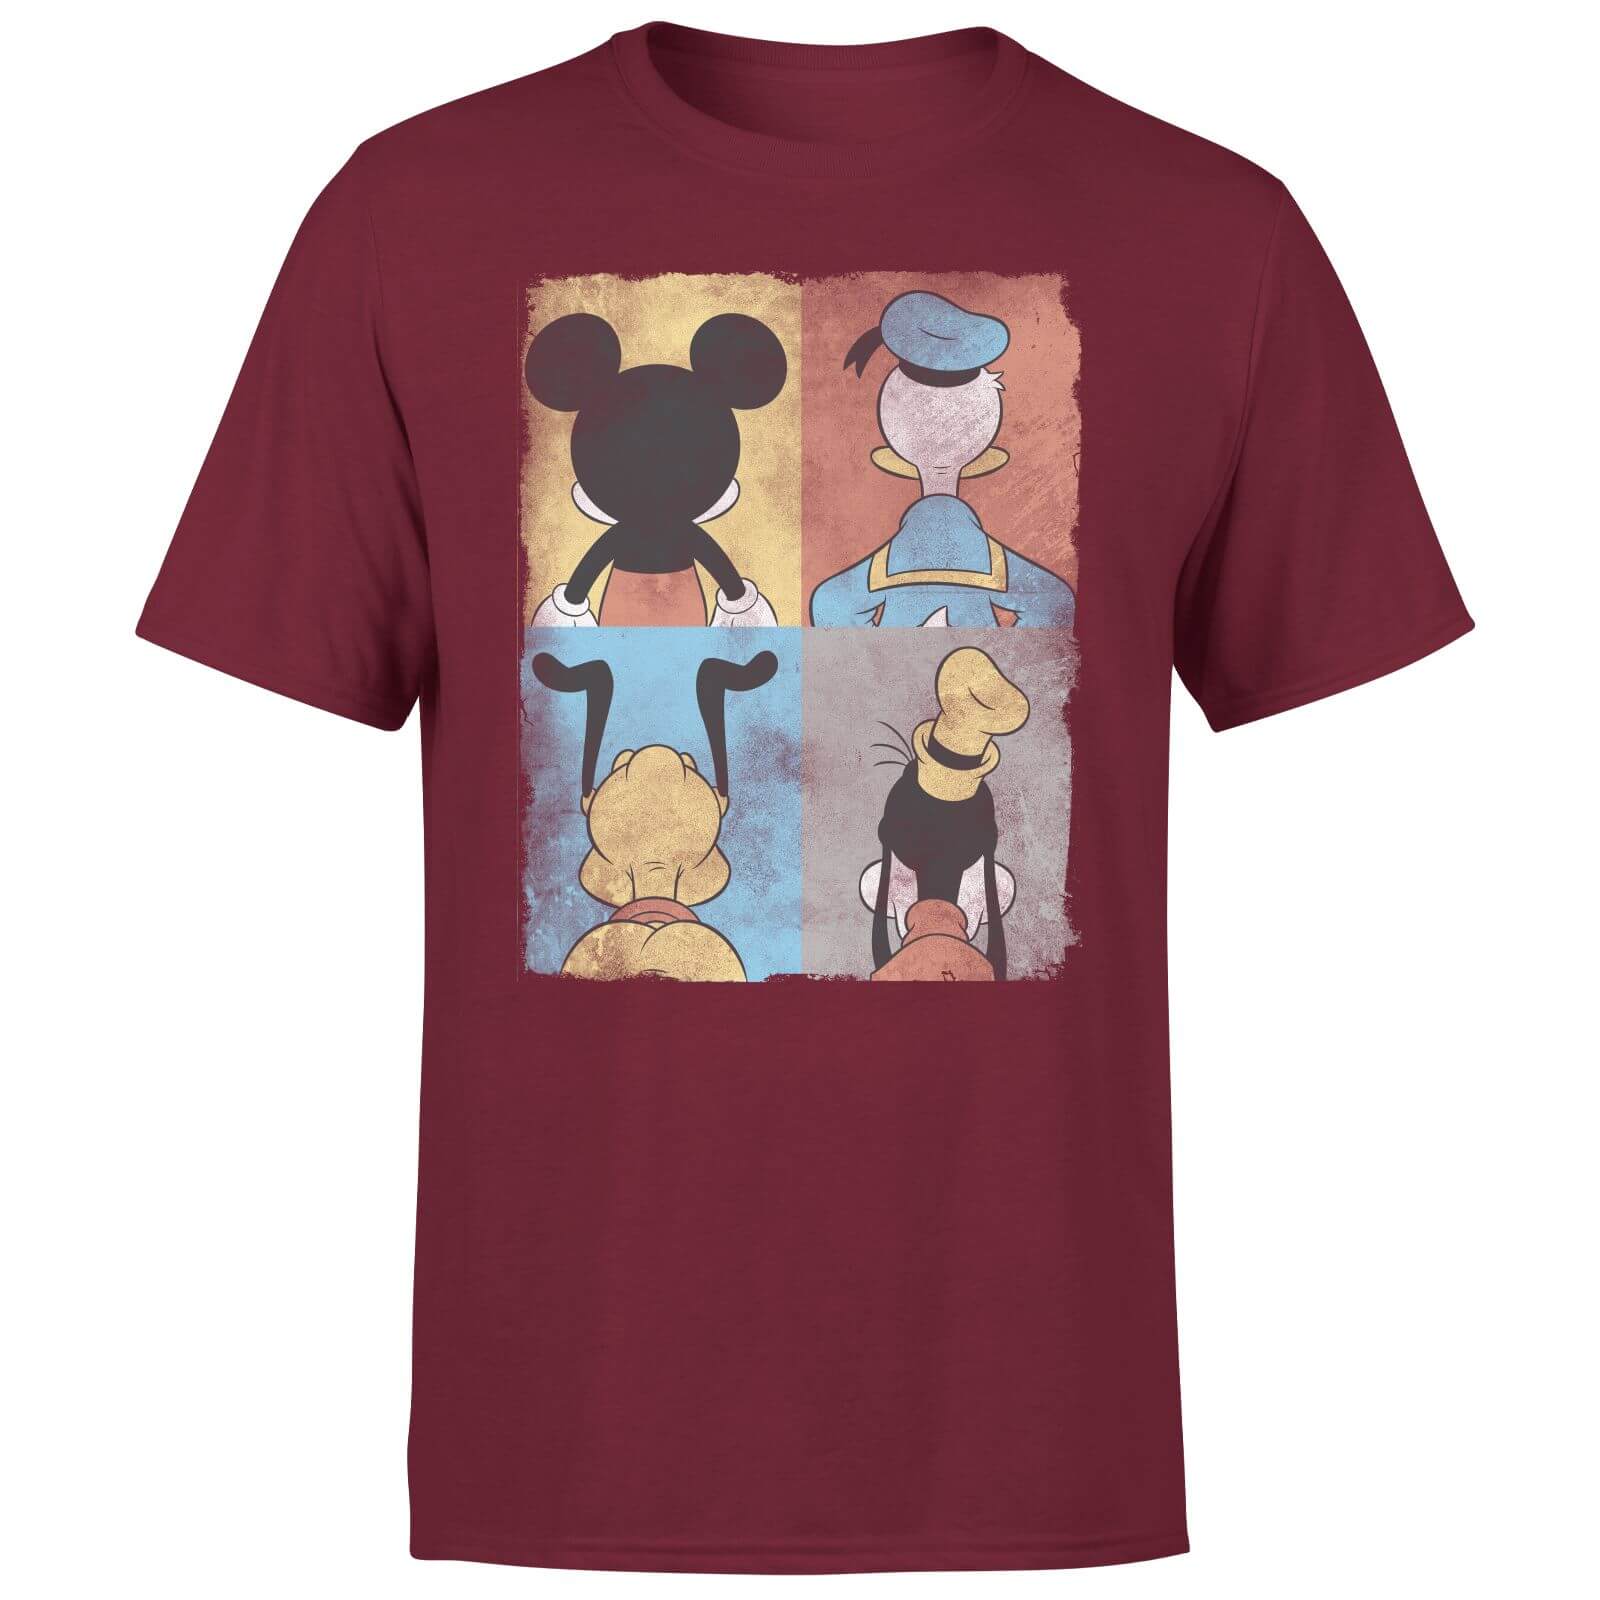 Donald Duck Mickey Mouse Pluto Goofy Tiles Men's T-Shirt - Burgundy - M - Burgundy